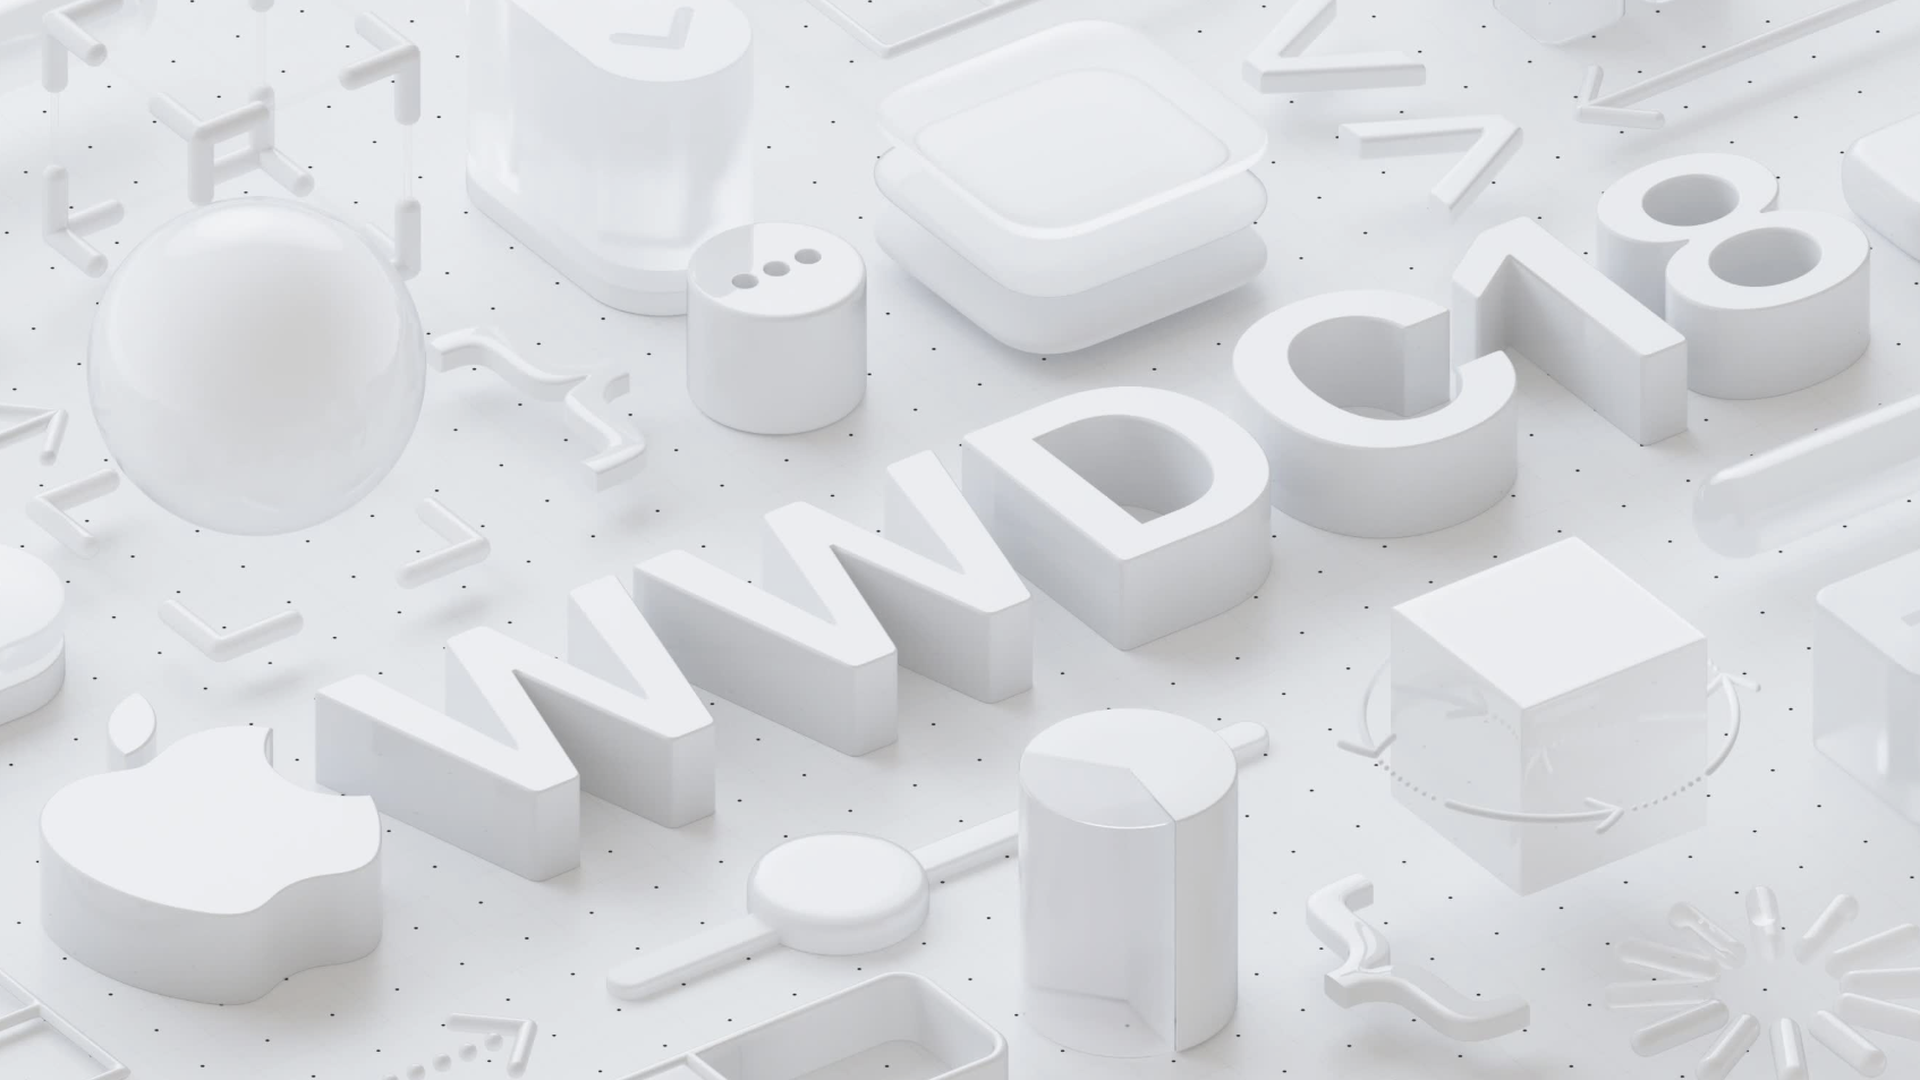 Screenshot of Apple's WWDC logo